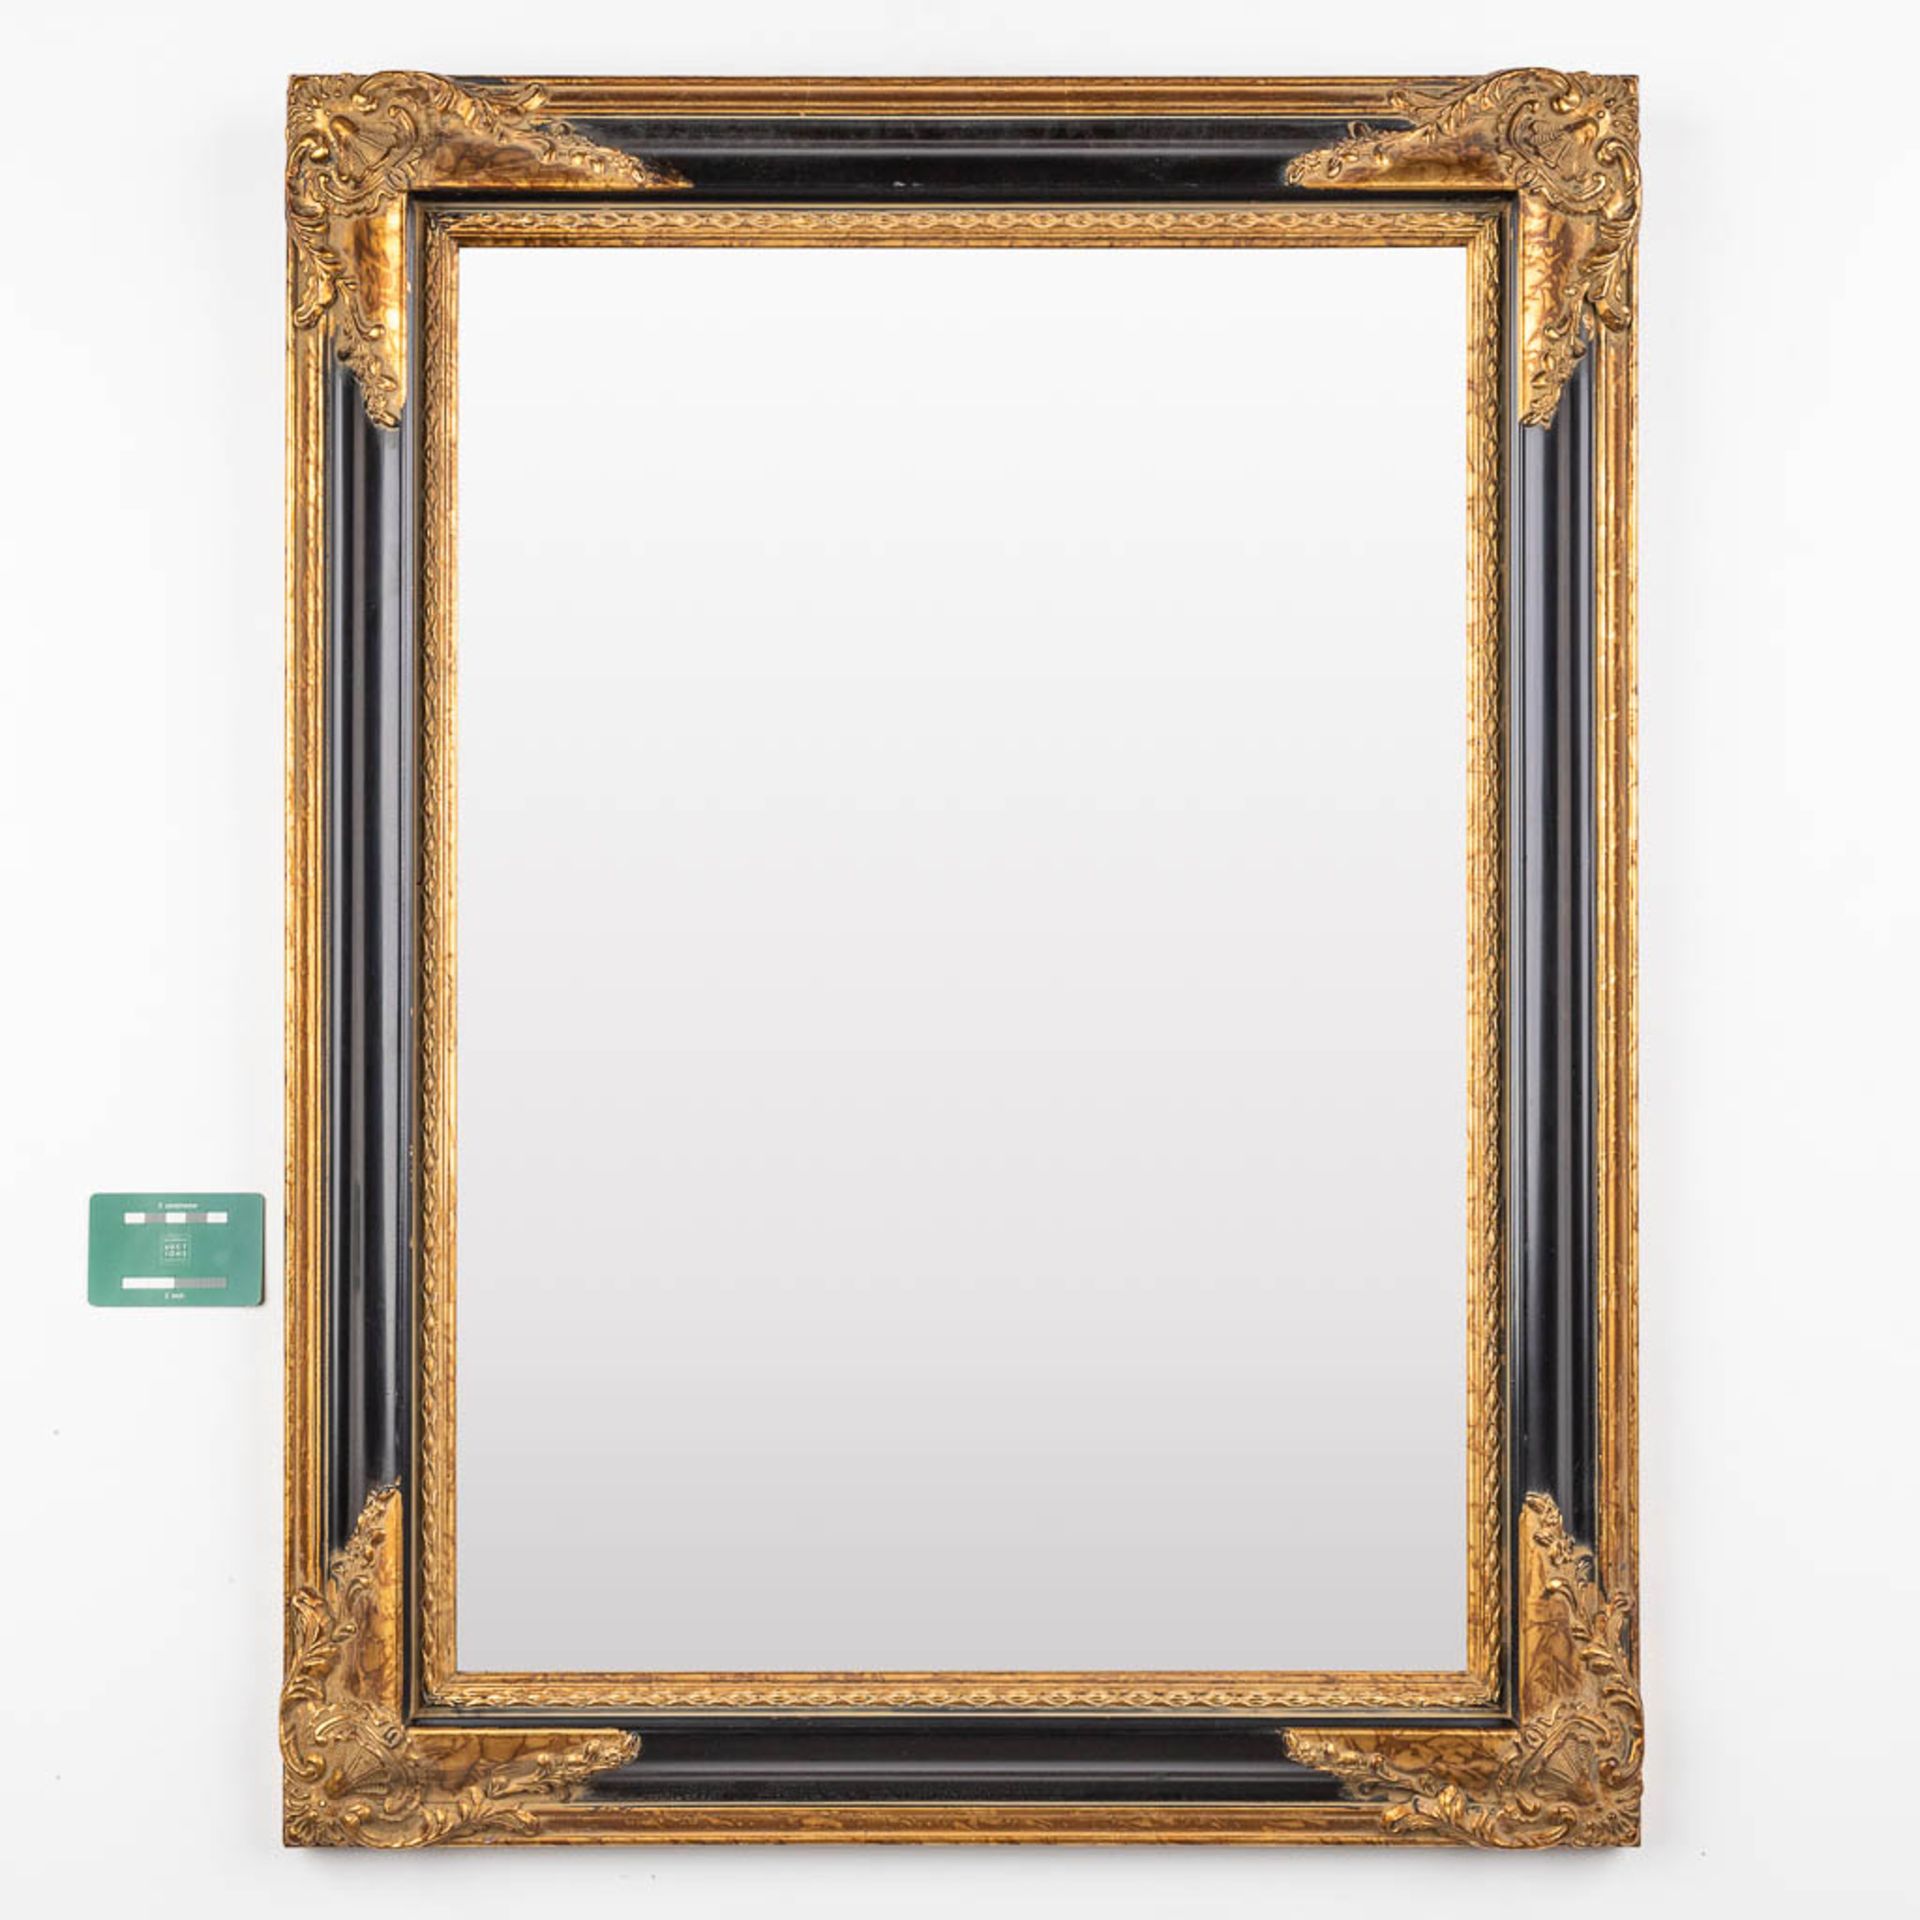 A mirror, 20th C. (W:65 x H:85 cm) - Image 2 of 8